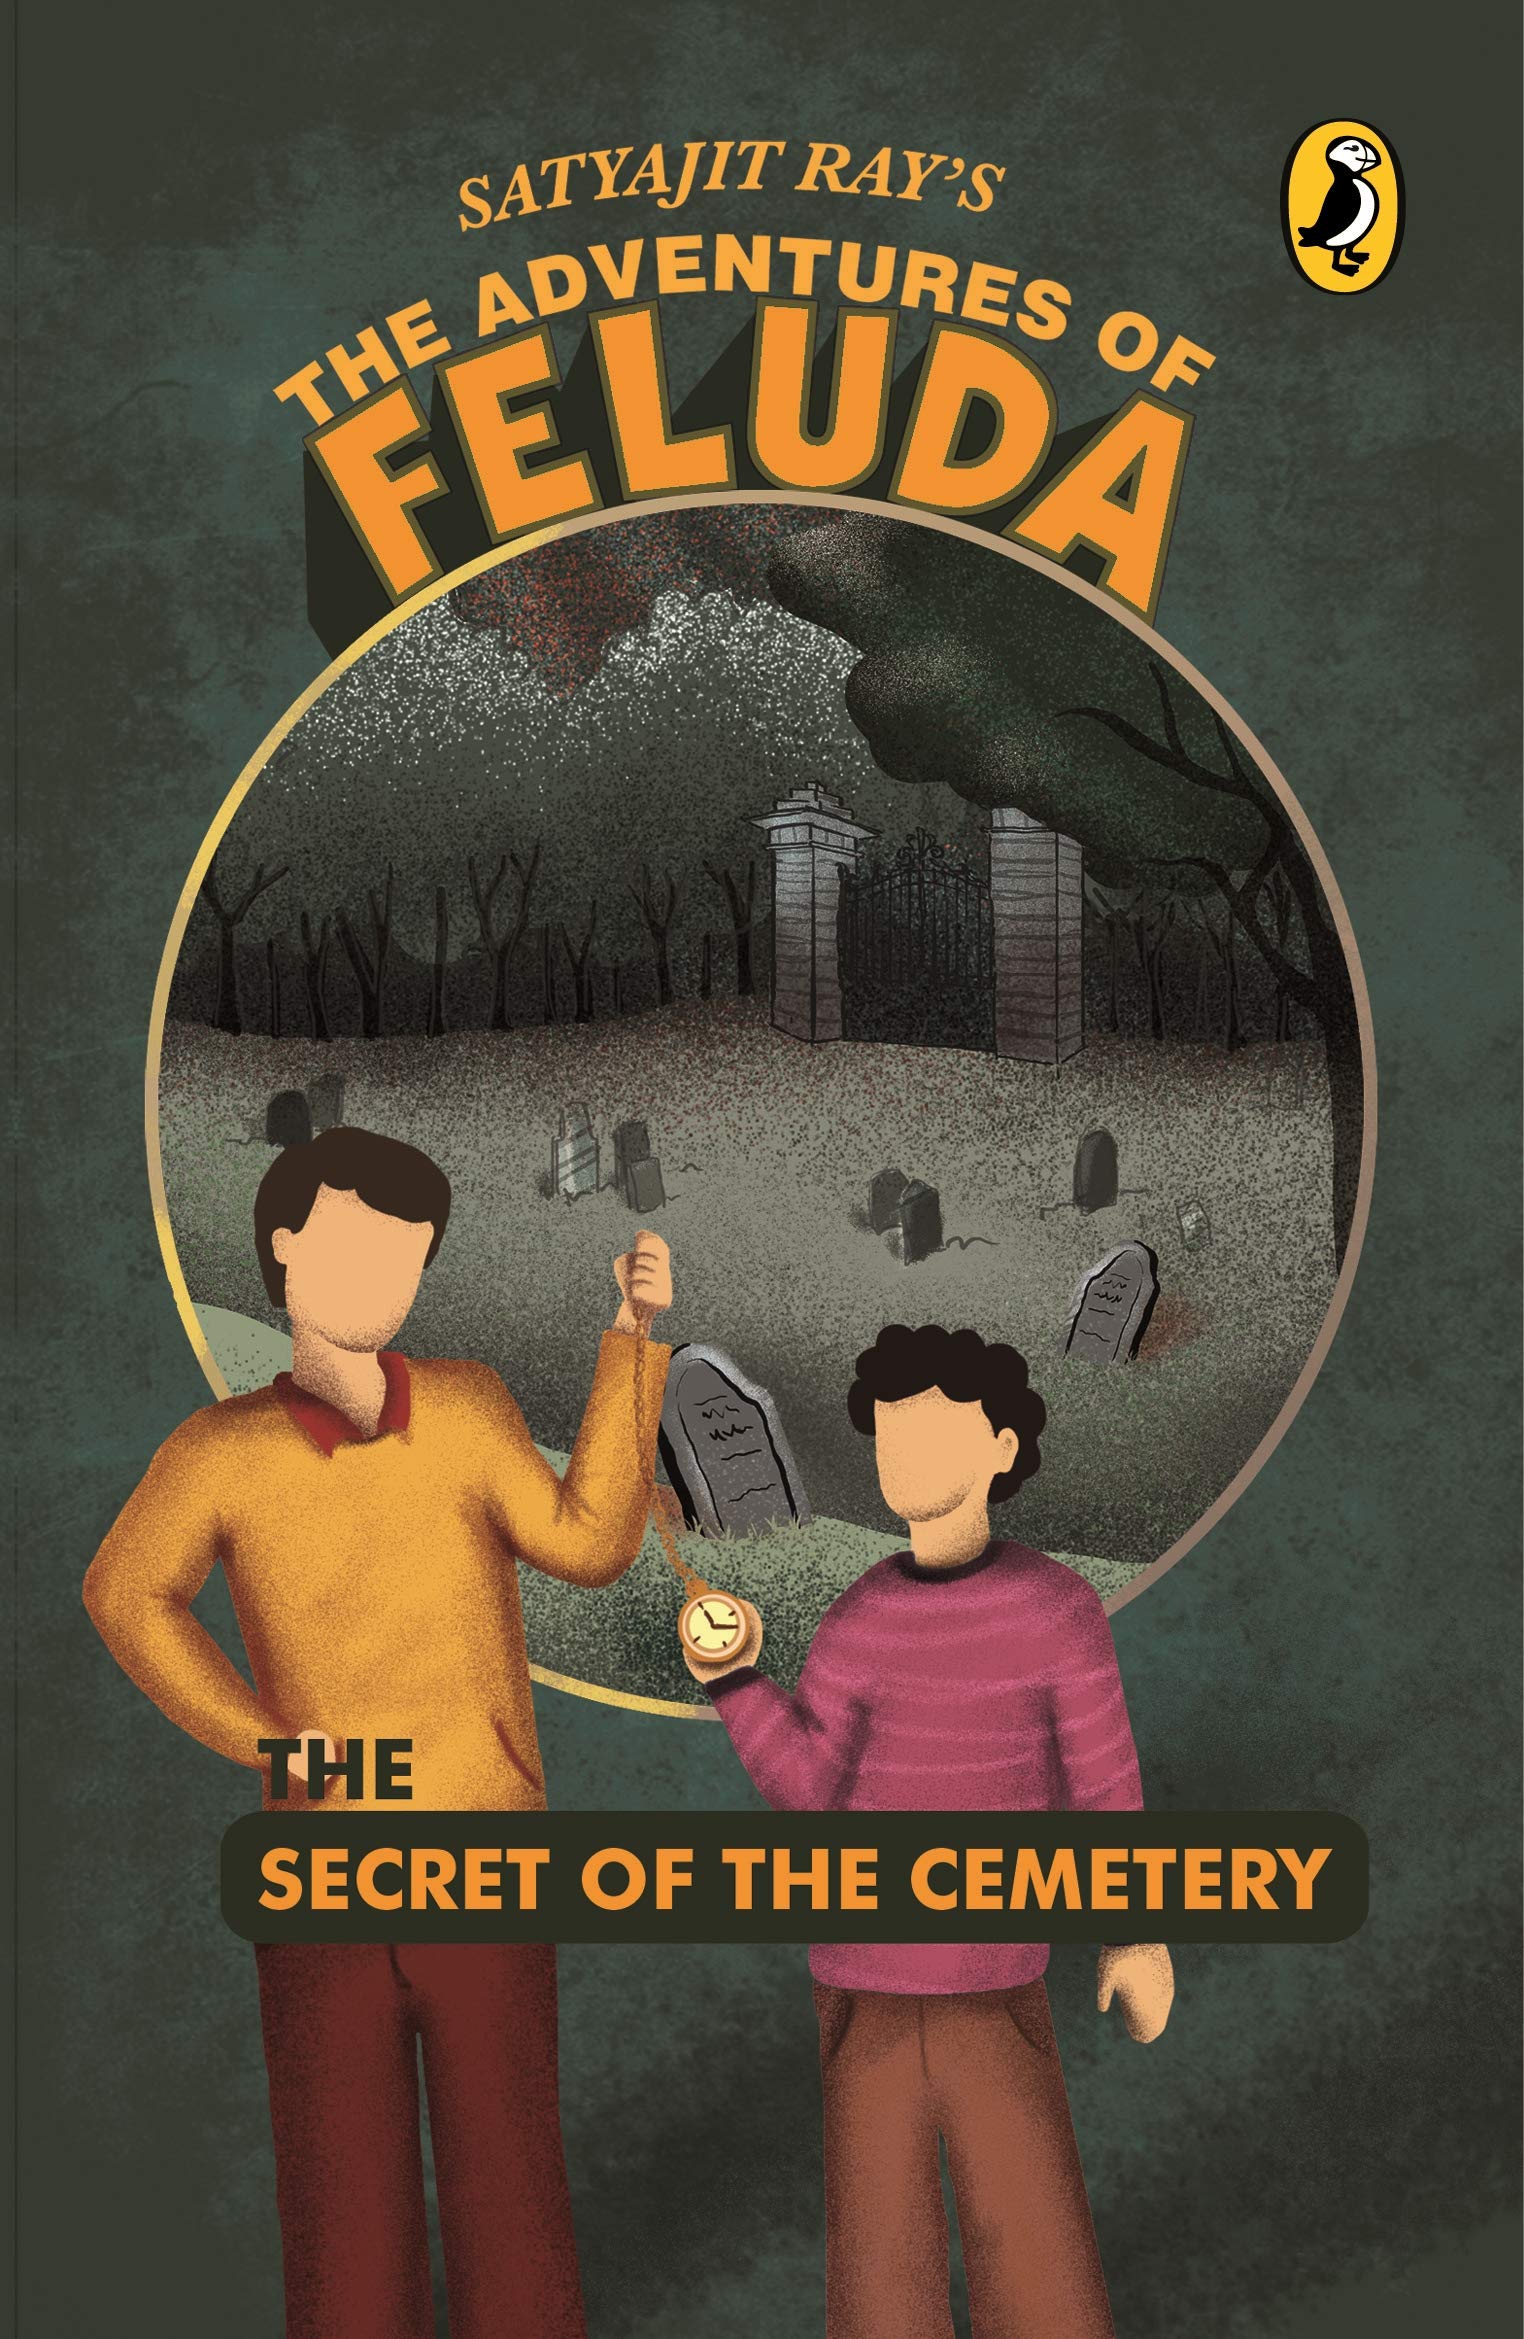 The Adventures of Feluda: The Secret of the Cemetery